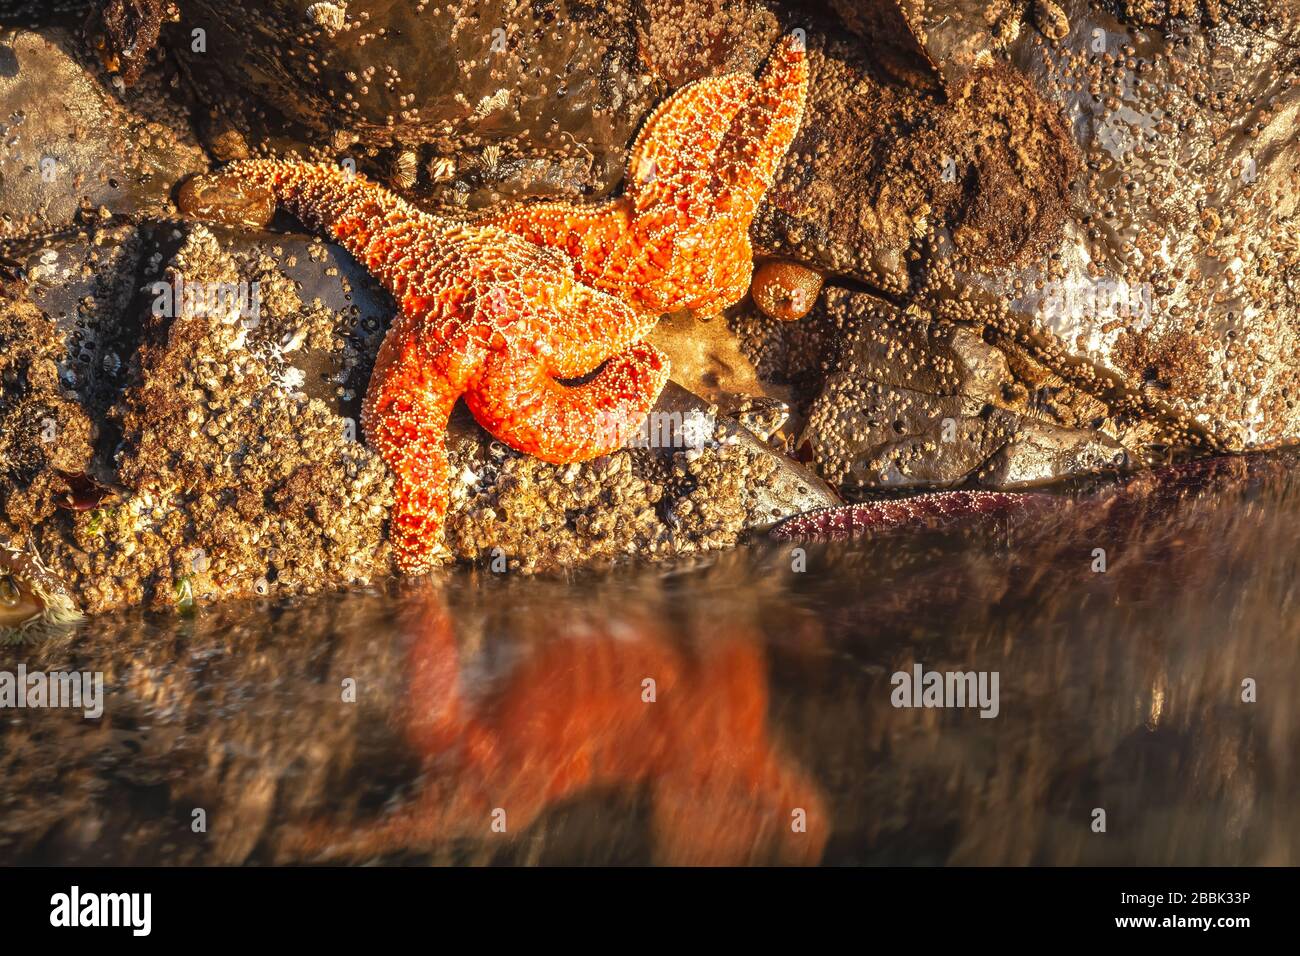 Ochre sea stars, Pisaster ochraceus, in a rock fissure at tide pool, Cannon Beach, Oregon, United States. Stock Photo